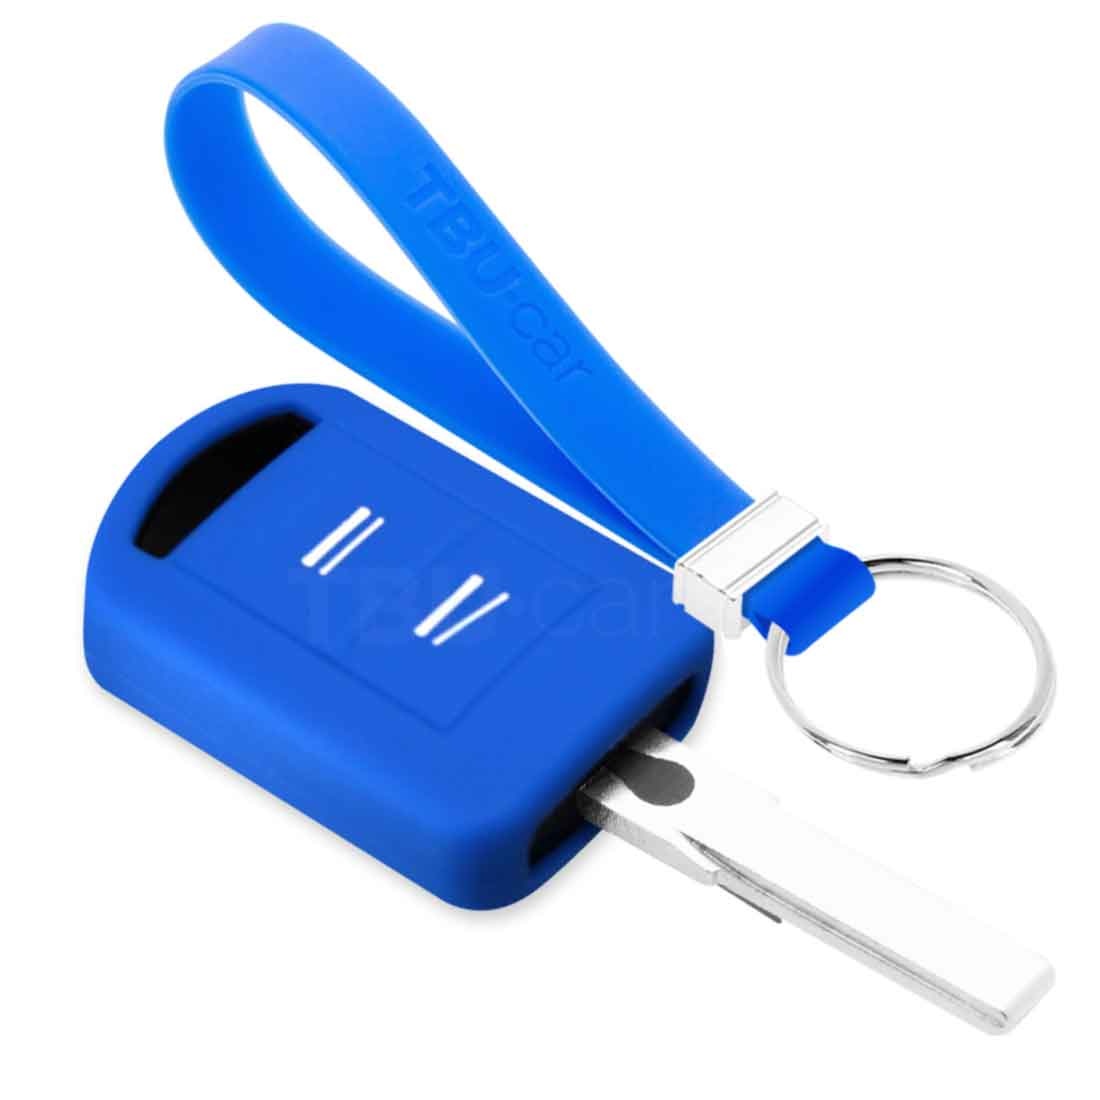 TBU car TBU car Sleutel cover compatibel met Vauxhall - Silicone sleutelhoesje - beschermhoesje autosleutel - Blauw